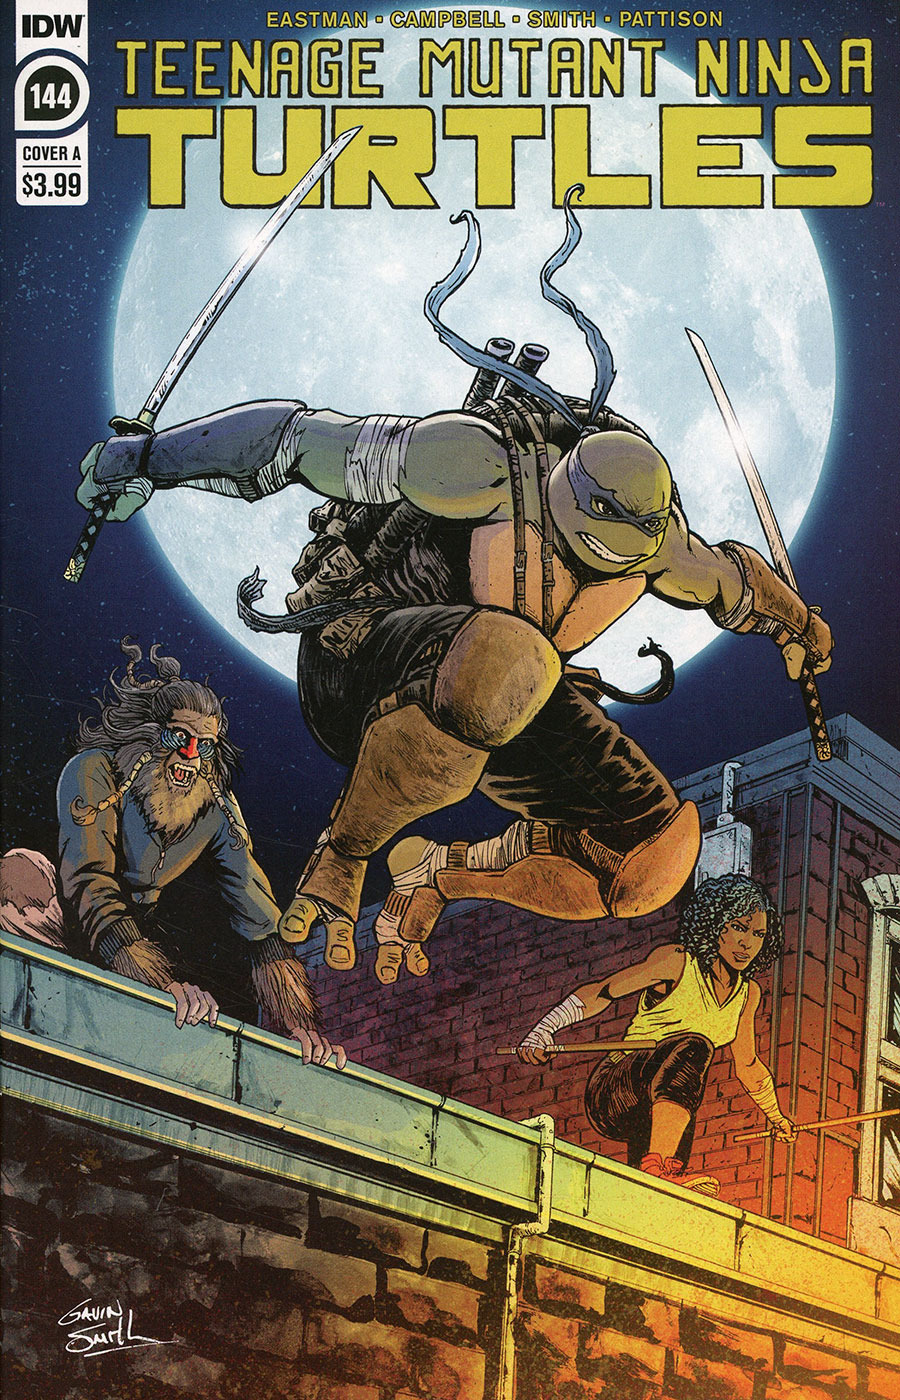 Teenage Mutant Ninja Turtles Vol 5 #144 Cover A Regular Gavin Smith Cover